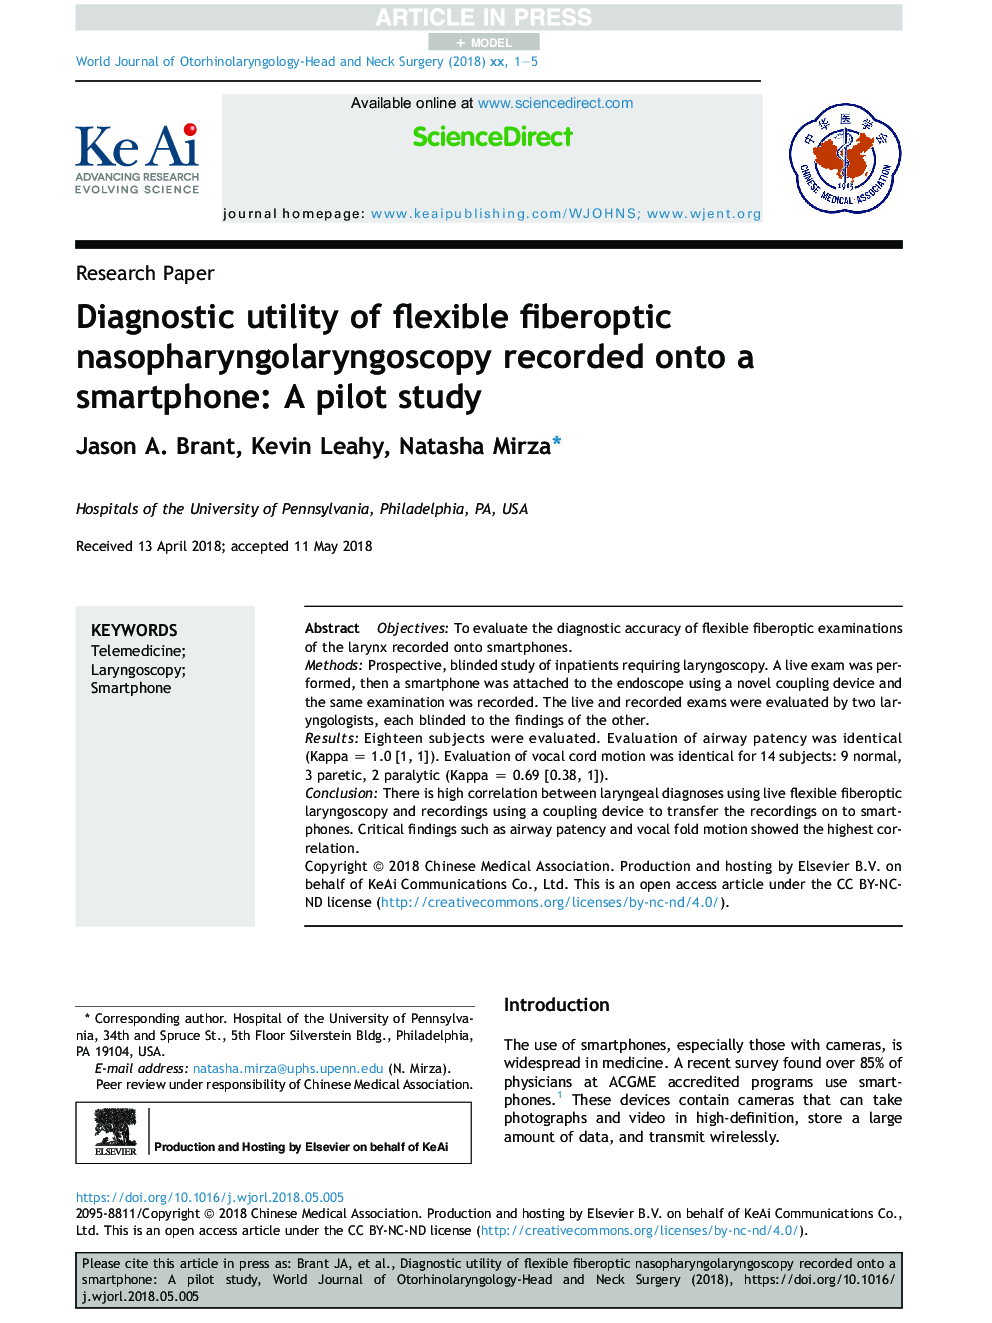 Diagnostic utility of flexible fiberoptic nasopharyngolaryngoscopy recorded onto a smartphone: A pilot study